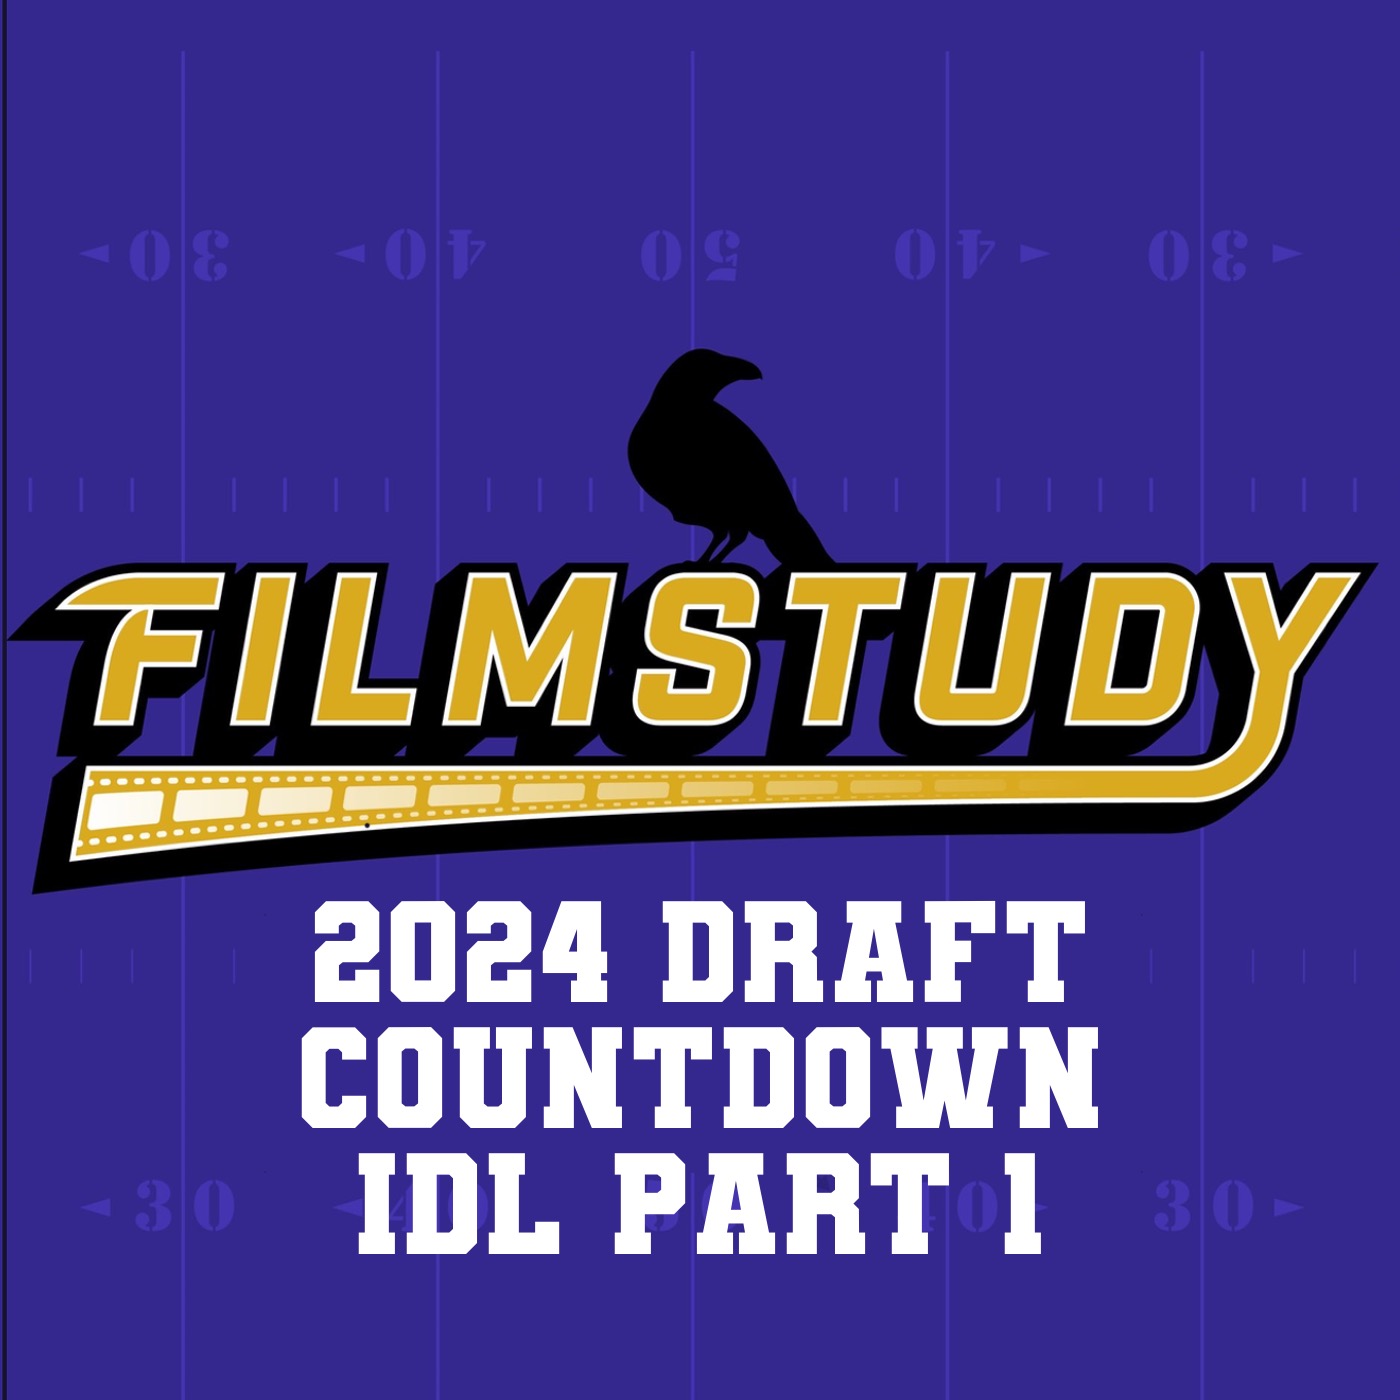 2024 Draft Countdown IDL Part 1